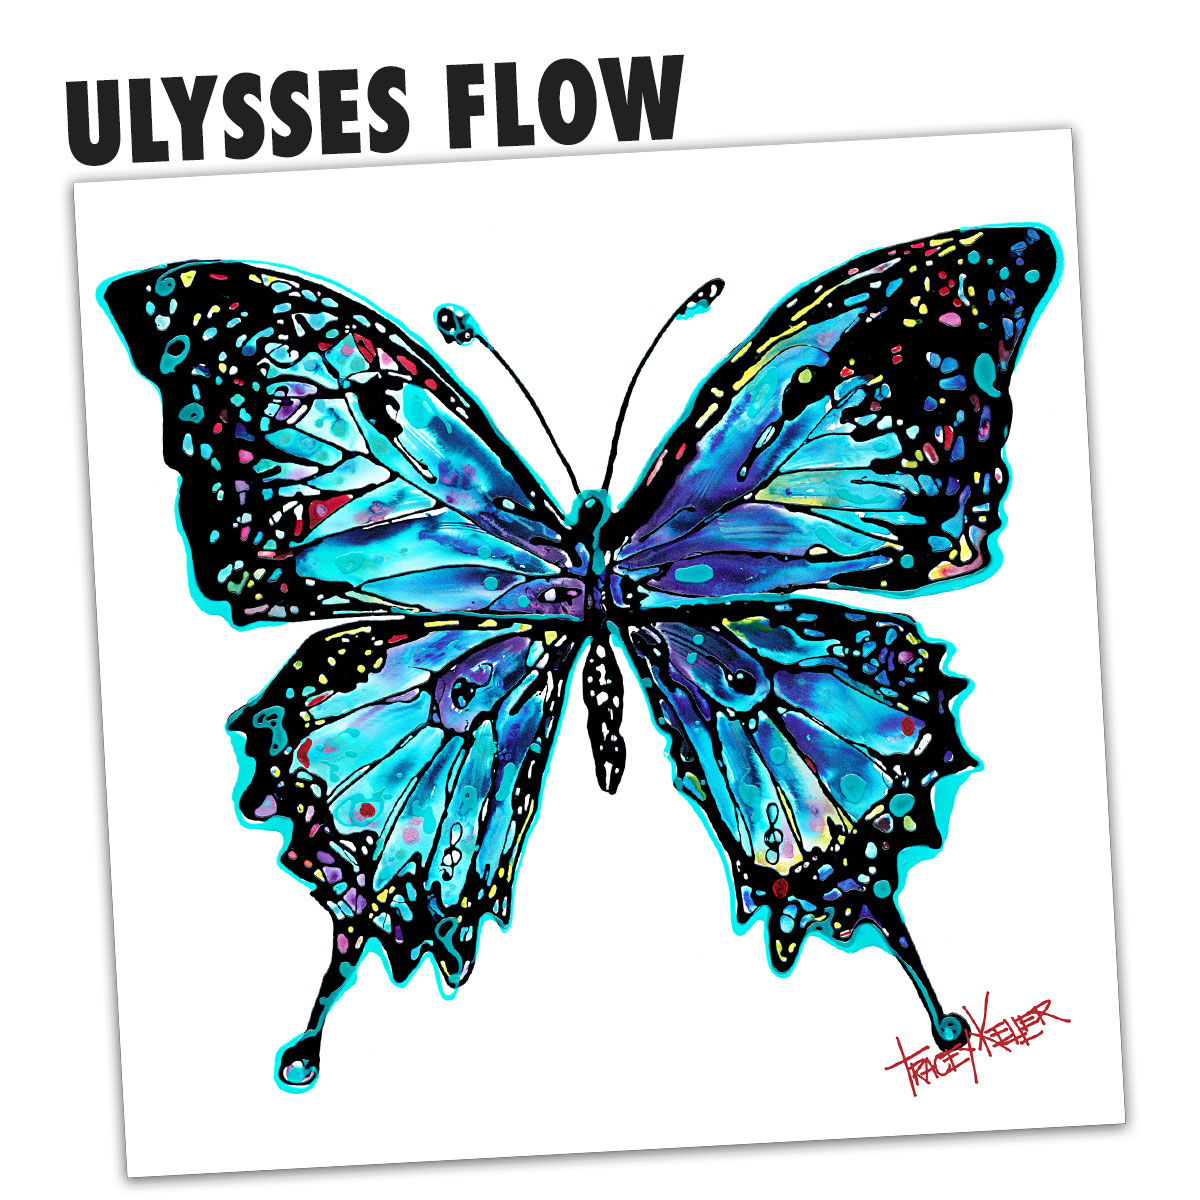 ULYSSES FLOW 2